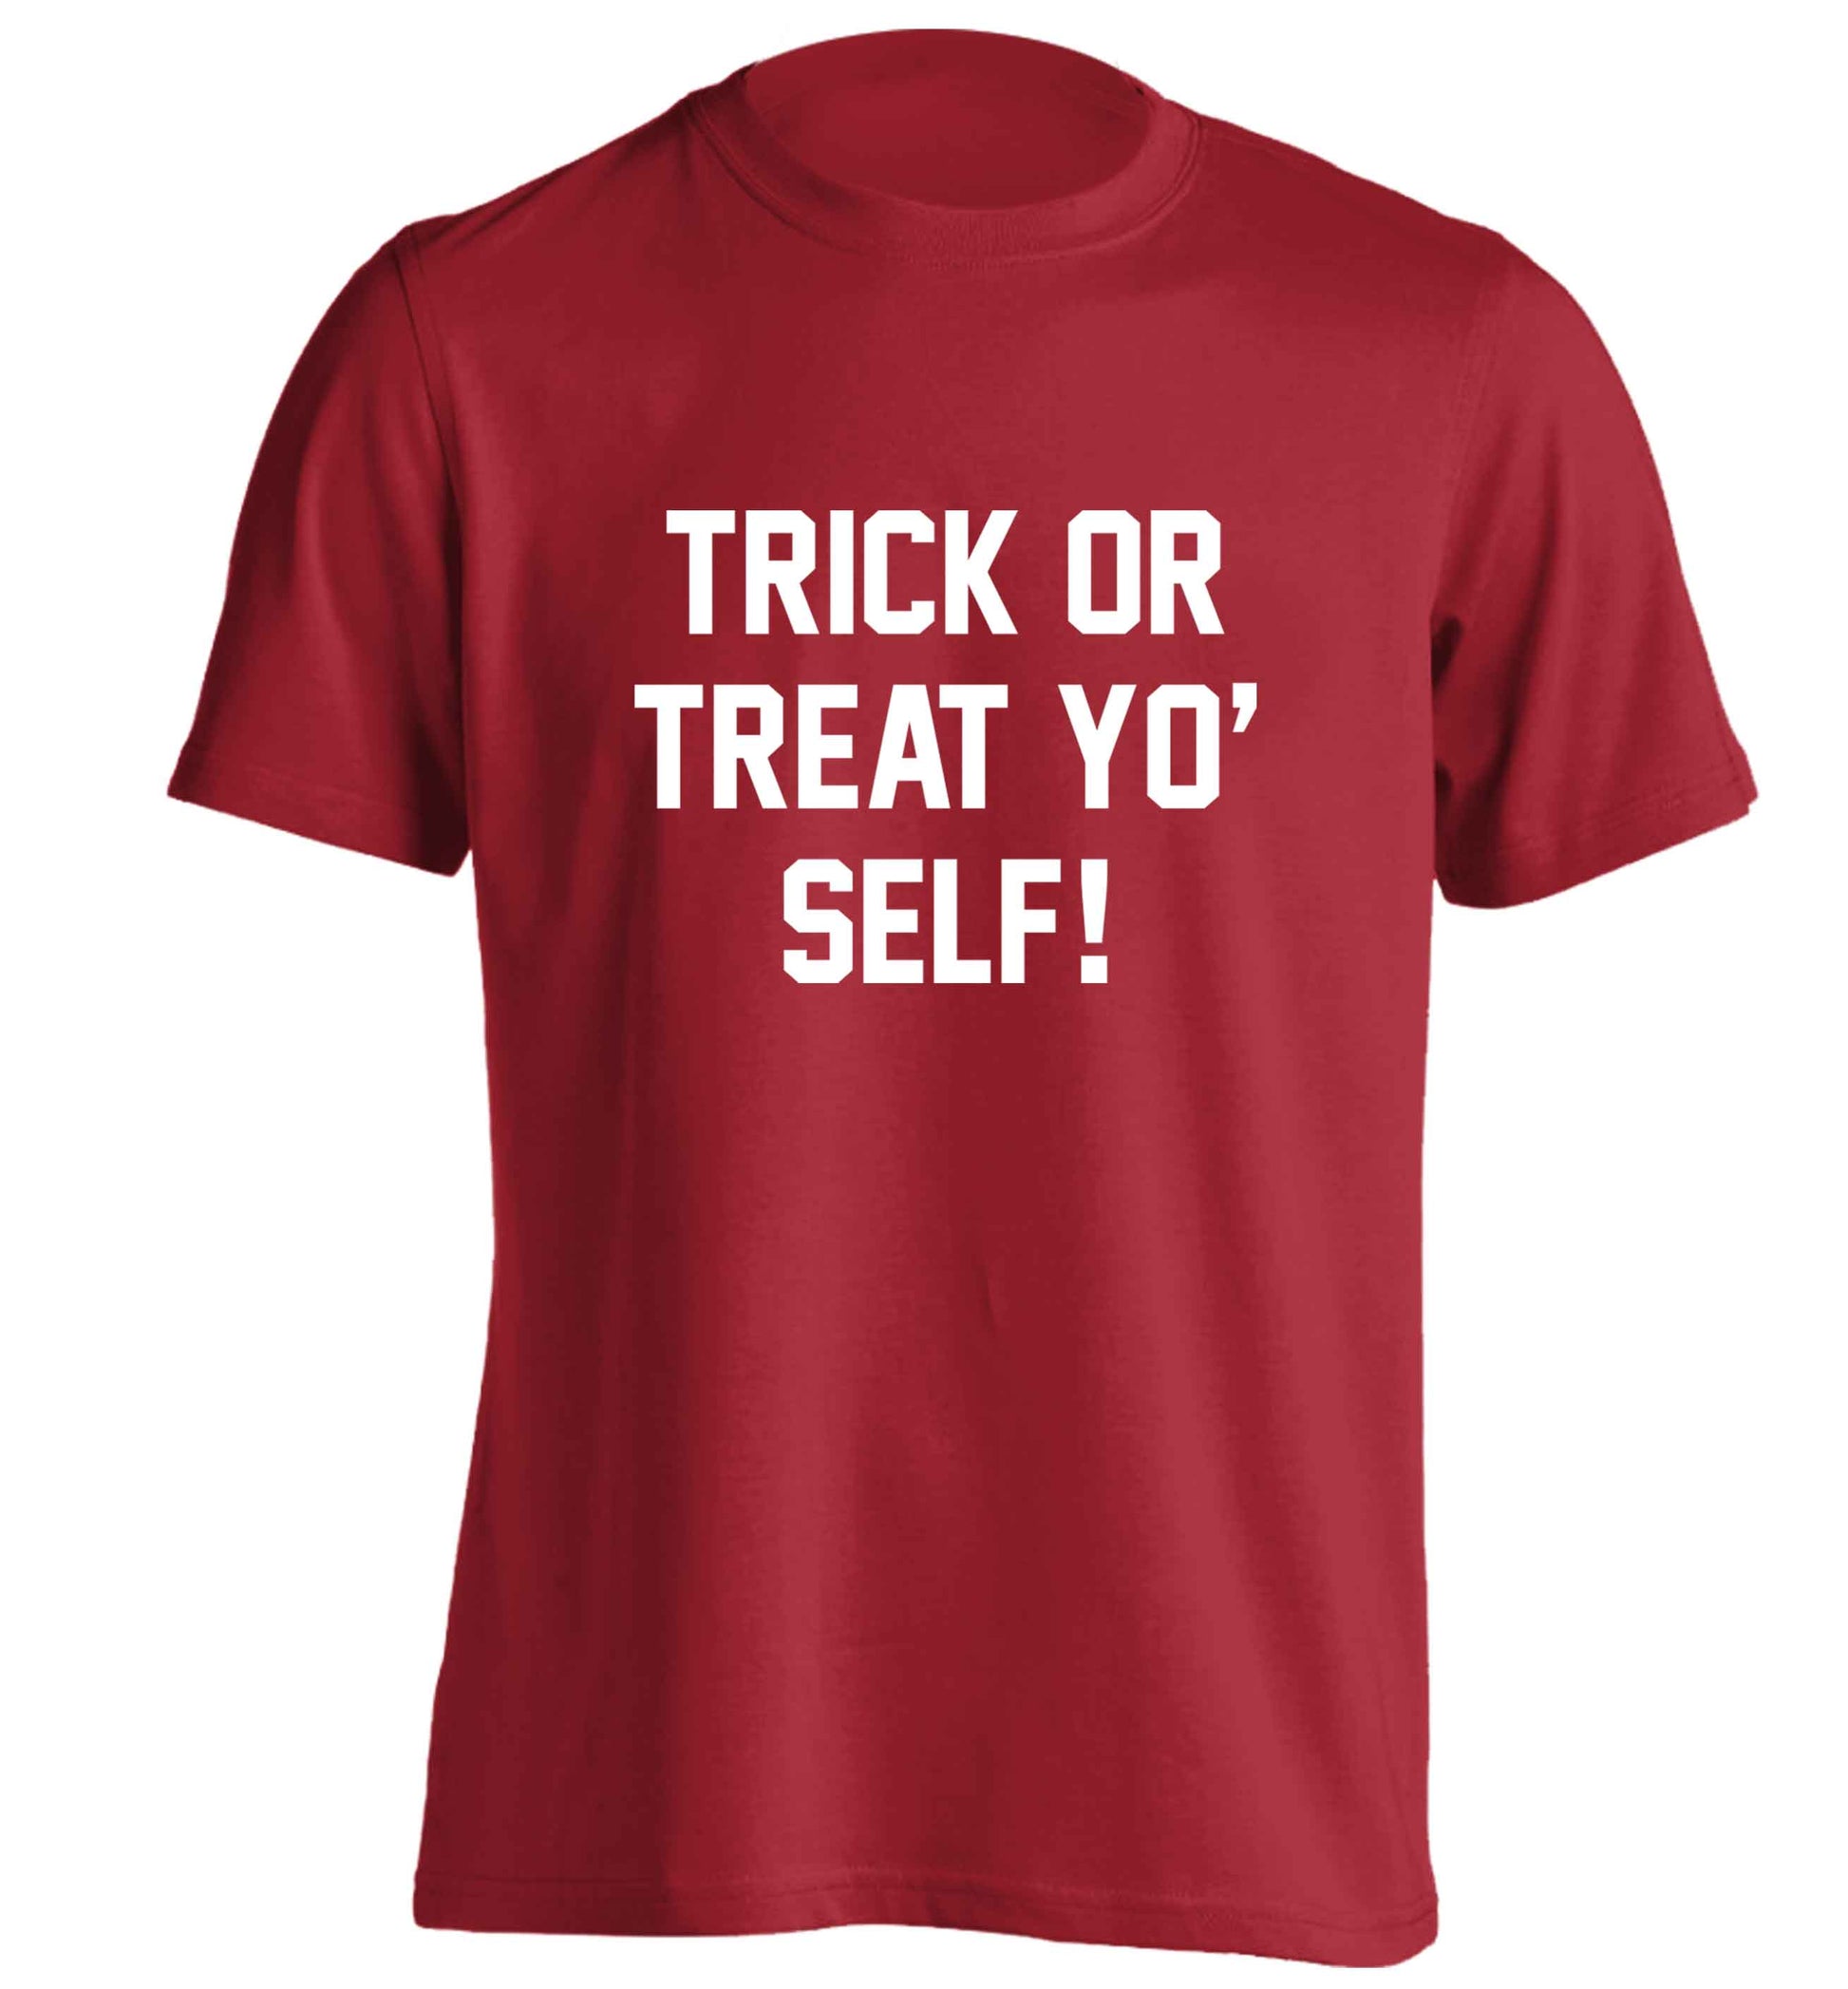 Trick or Treat Yo' Self adults unisex red Tshirt 2XL